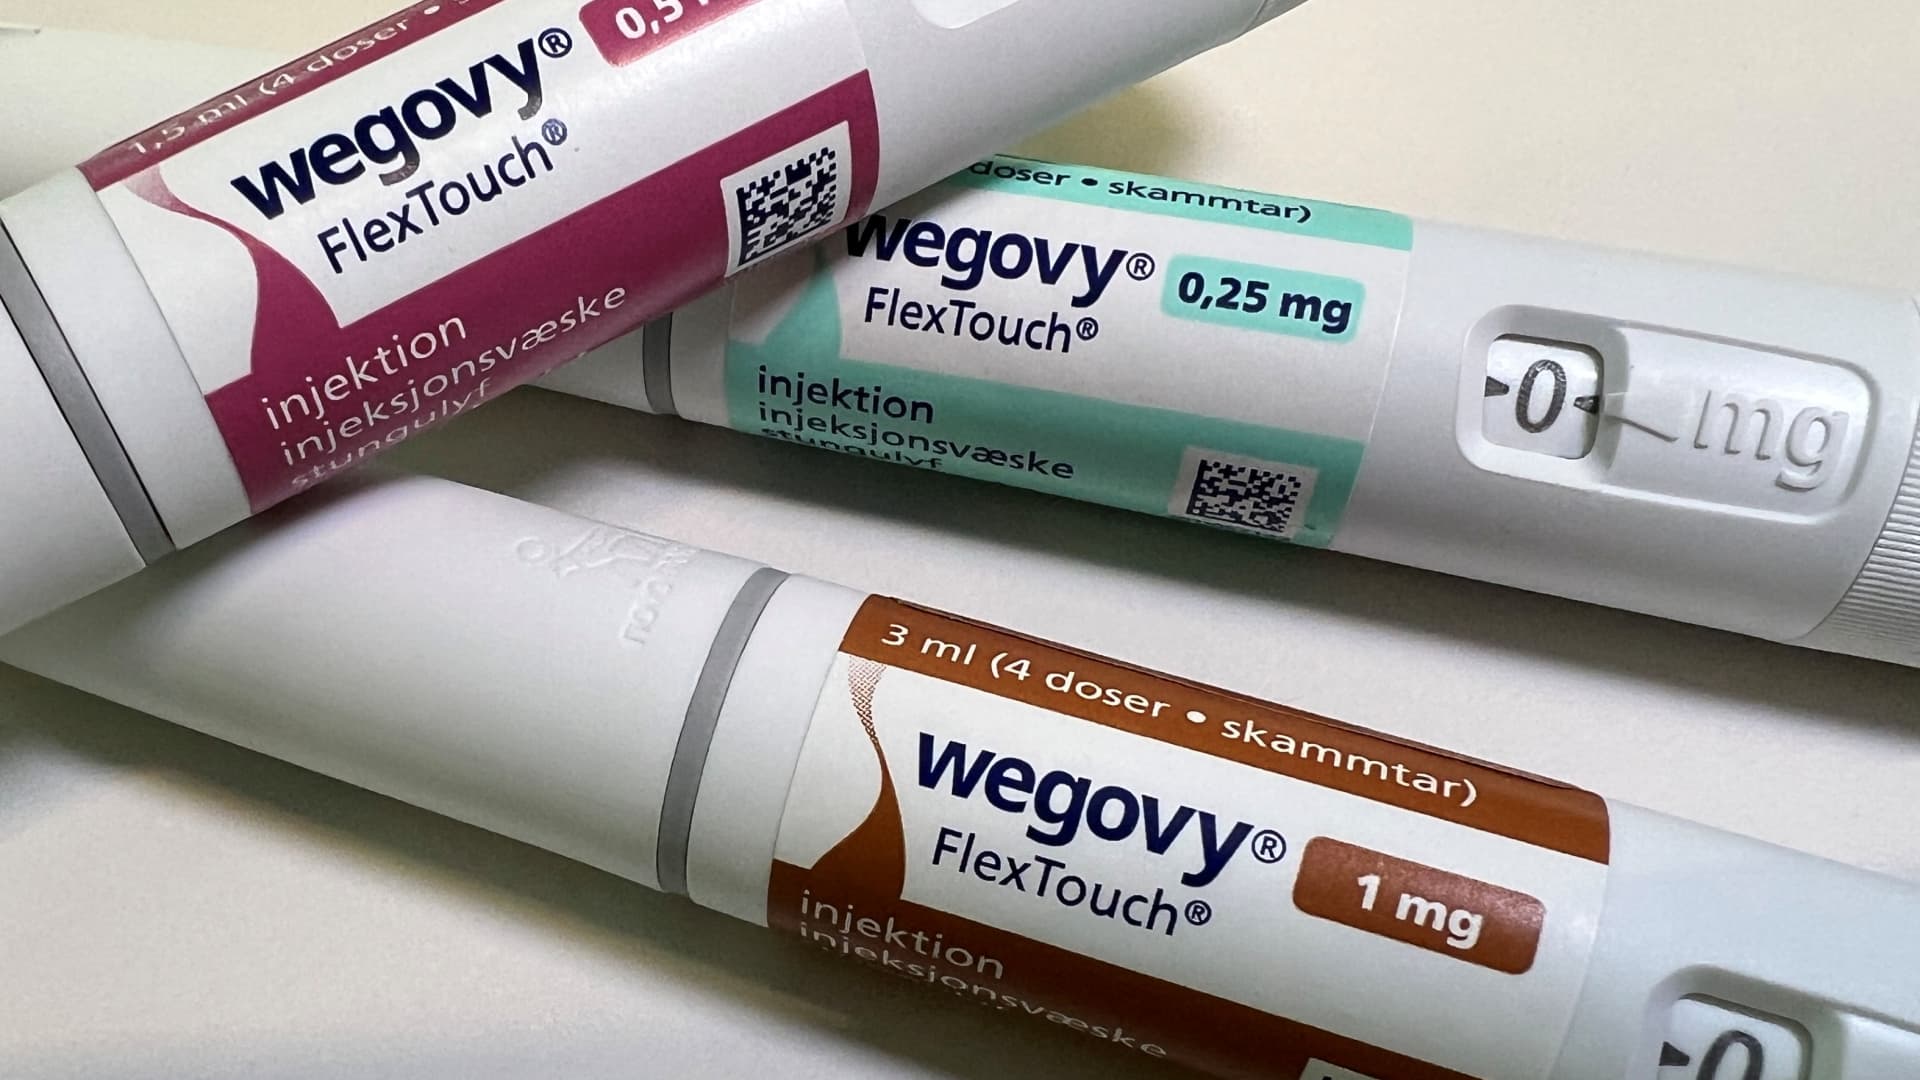 FDA approves Wegovy for reducing heart disease risk